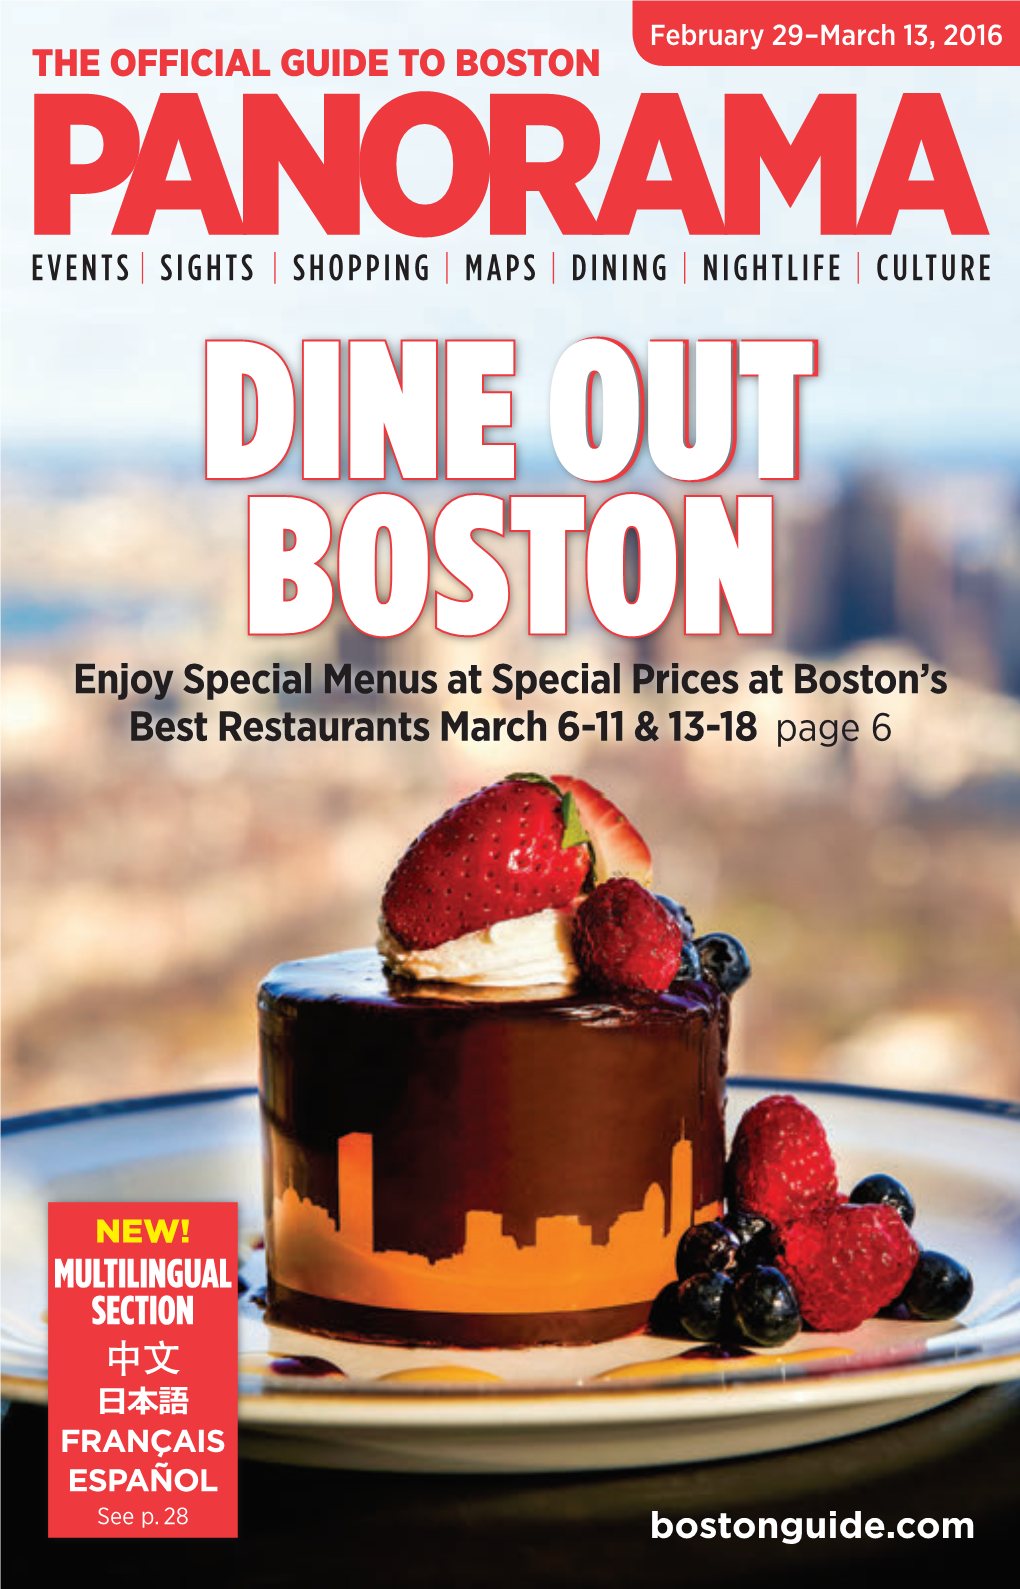 Enjoy Special Menus at Special Prices at Boston's Best Restaurants